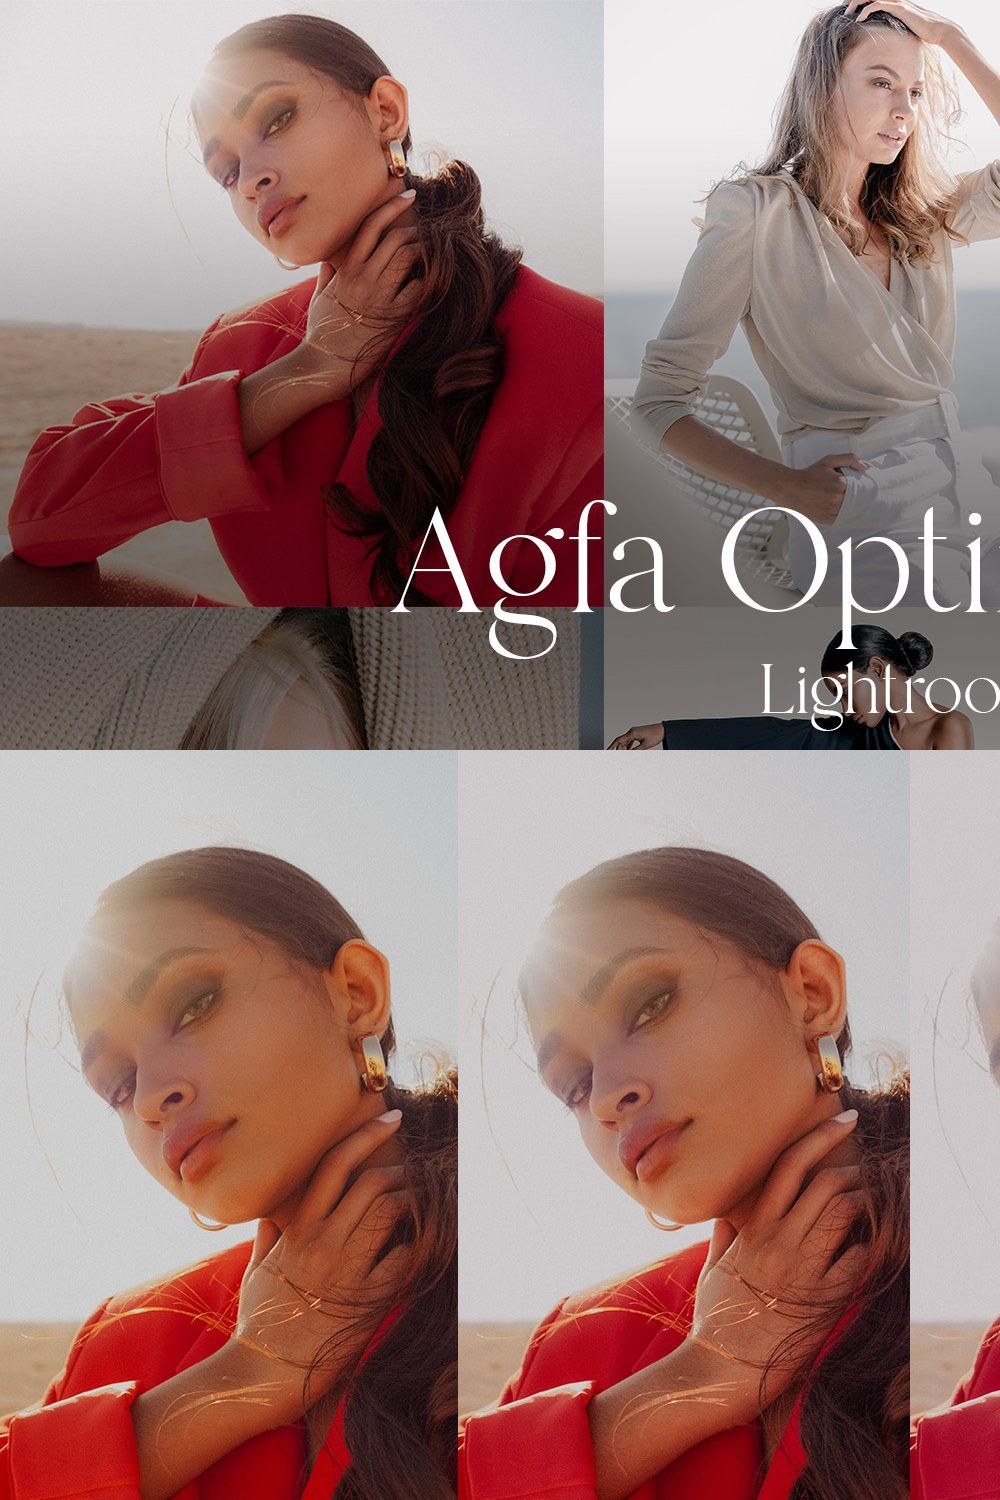 Agfa Optima 100 — Lightroom pinterest preview image.